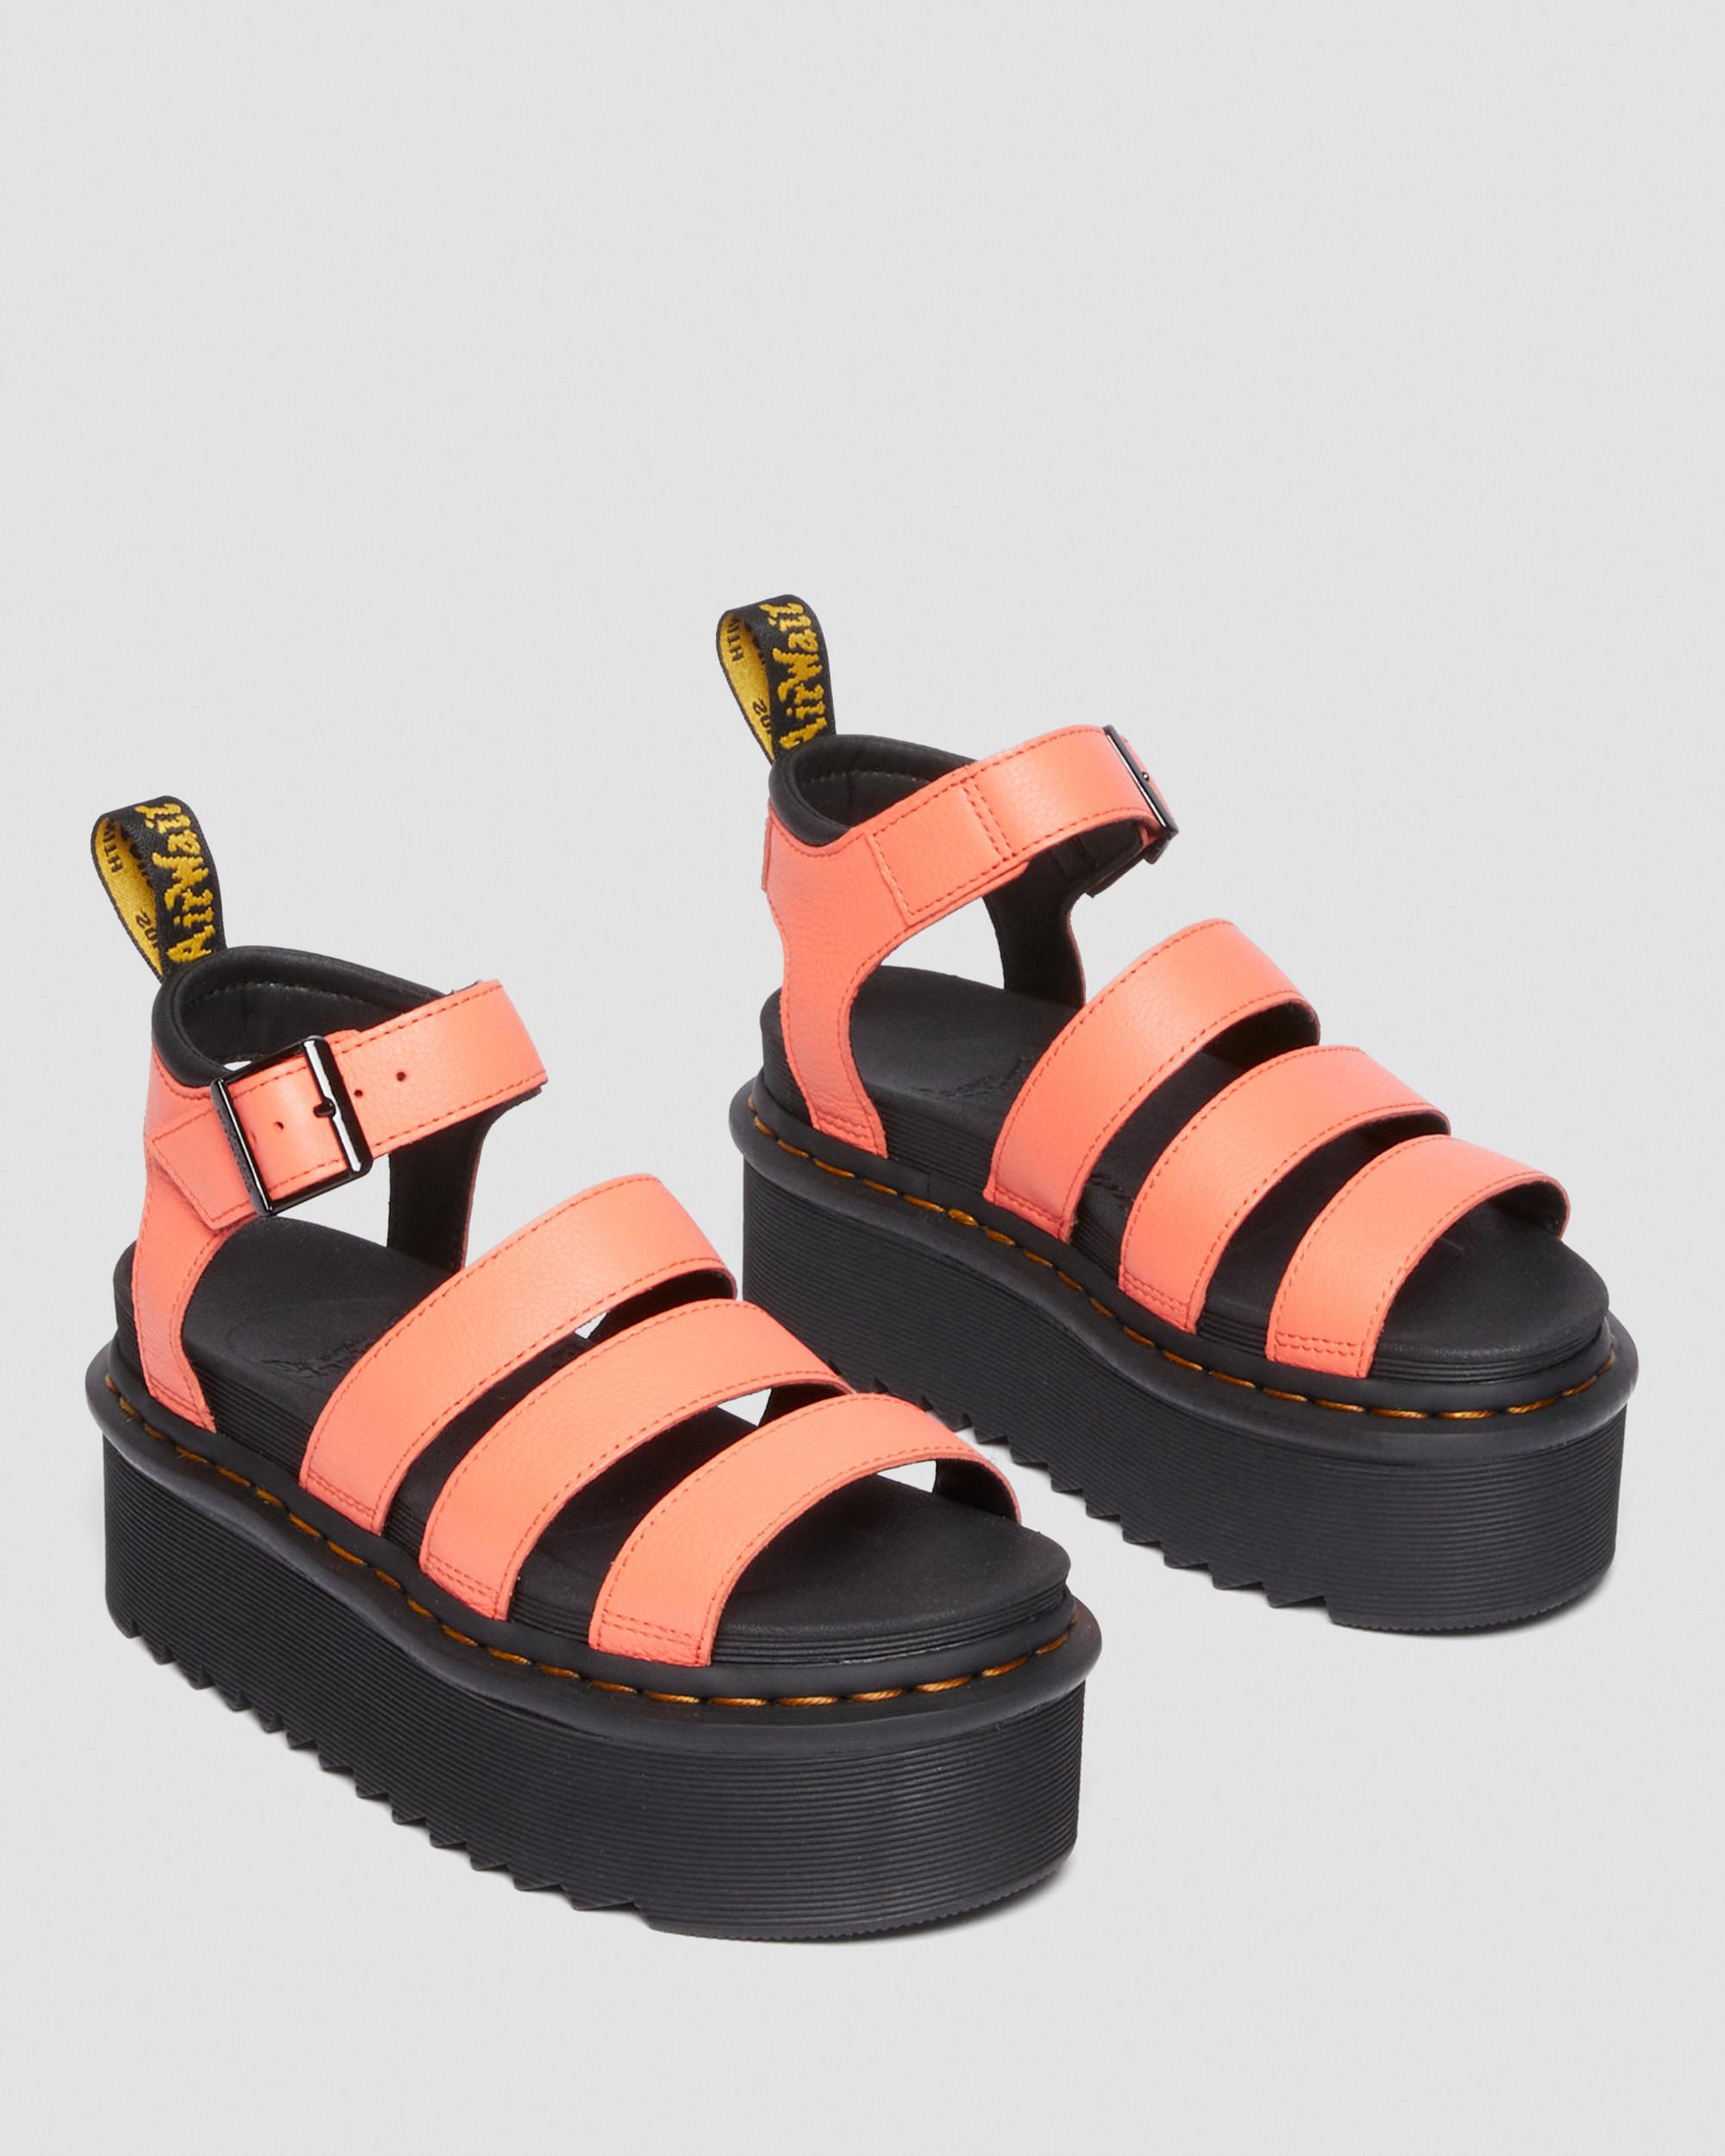 Blaire Quad Pisa Leather Strap Platform Sandals in Coral